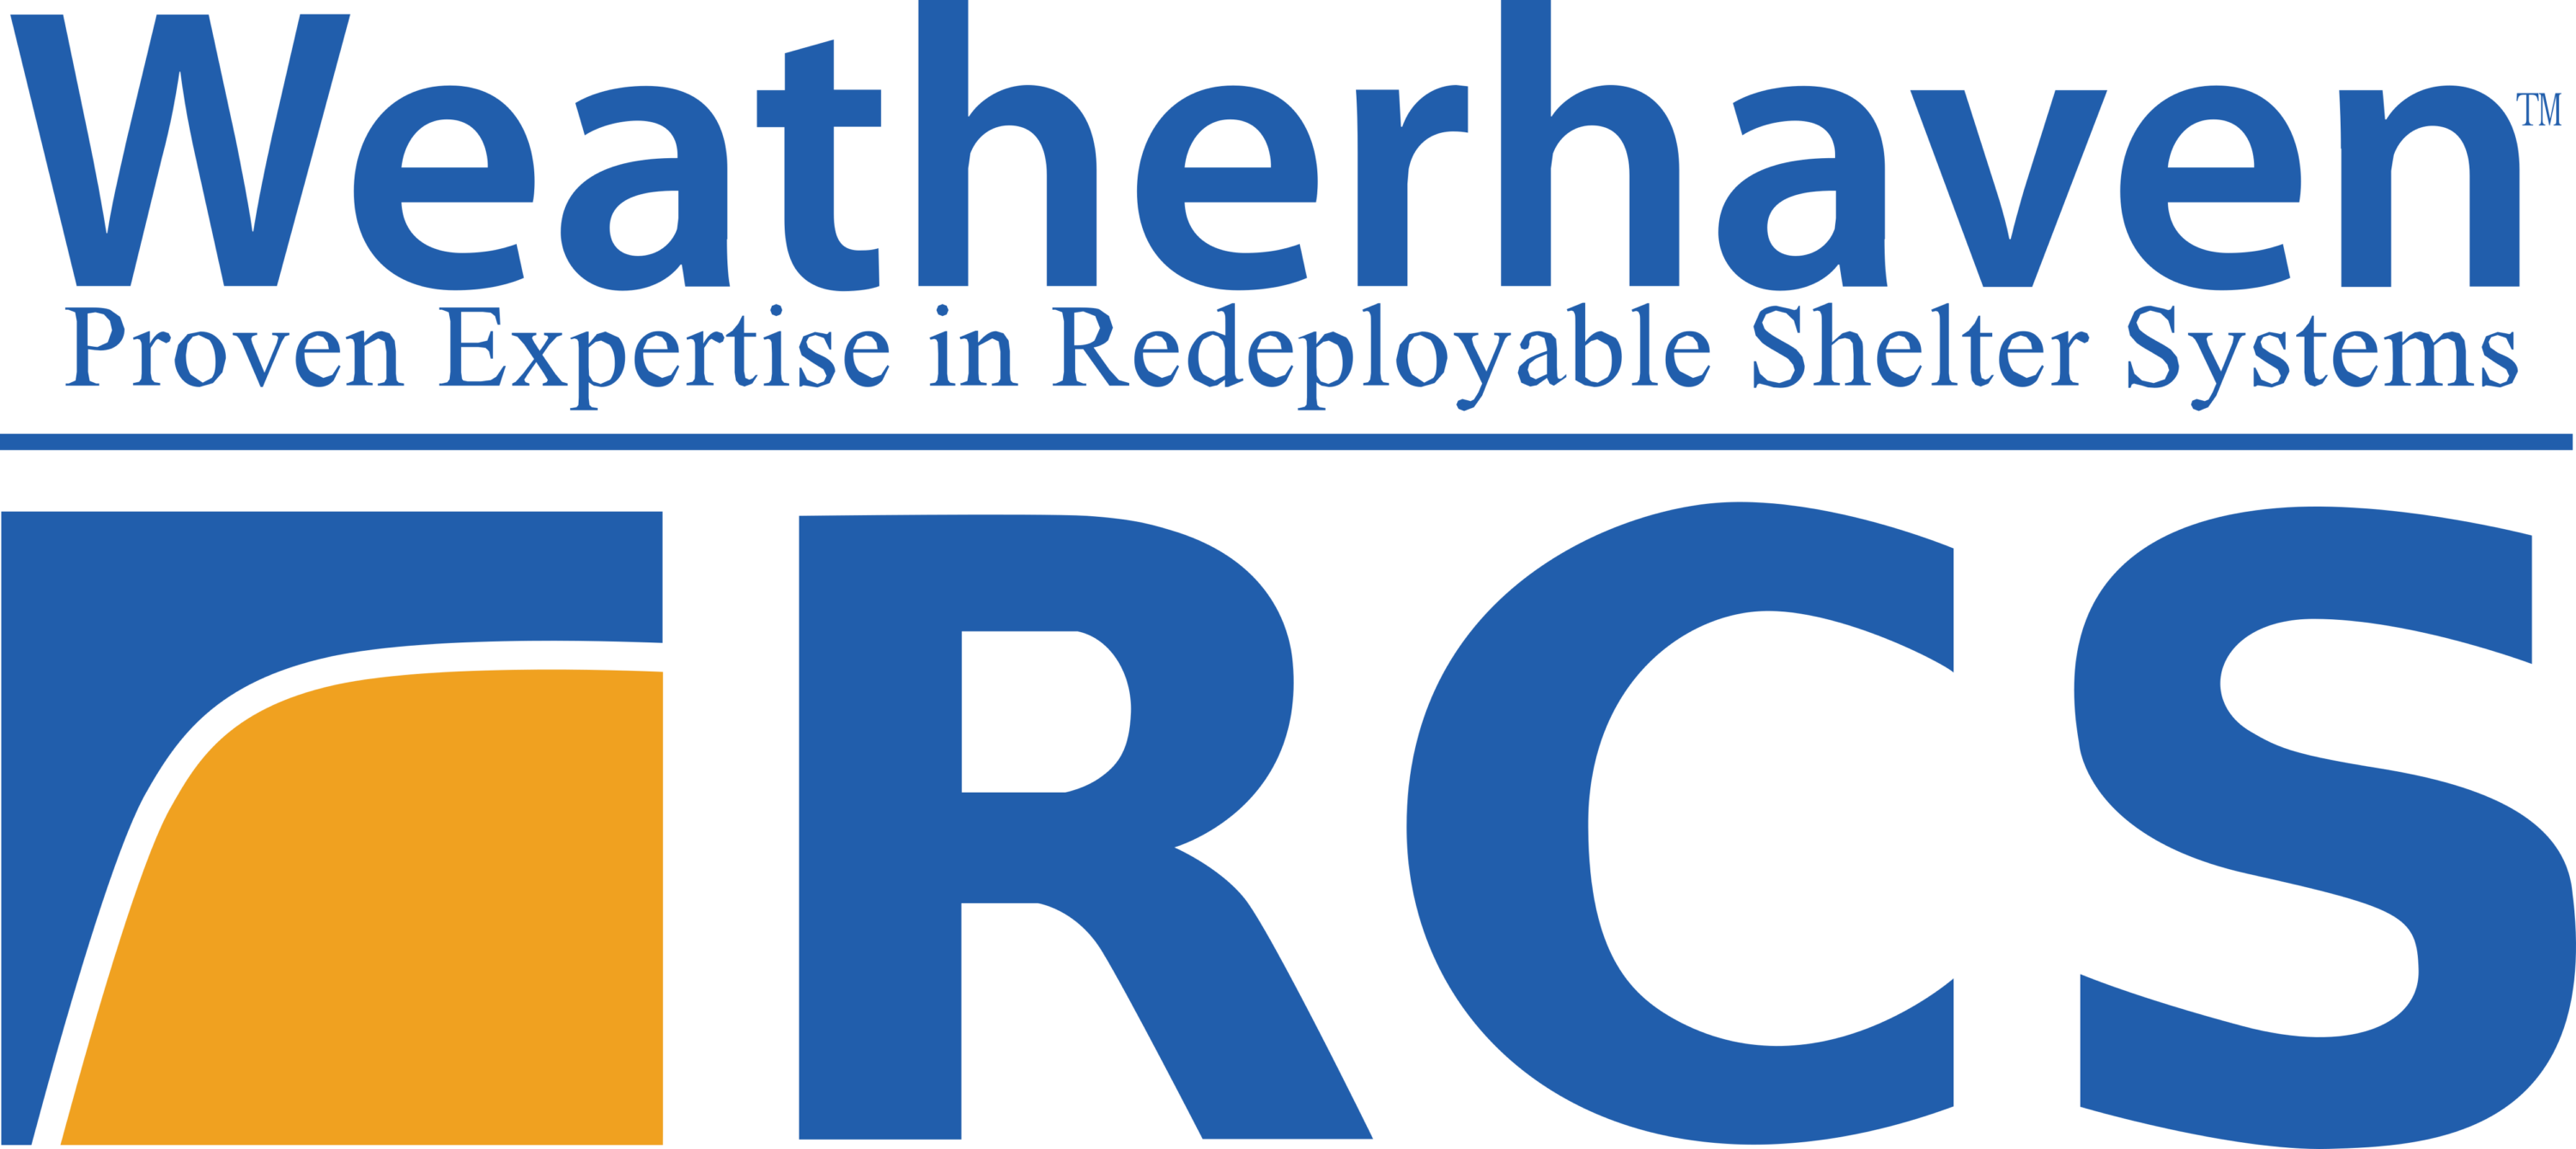 Weatherhaven RCS Logo